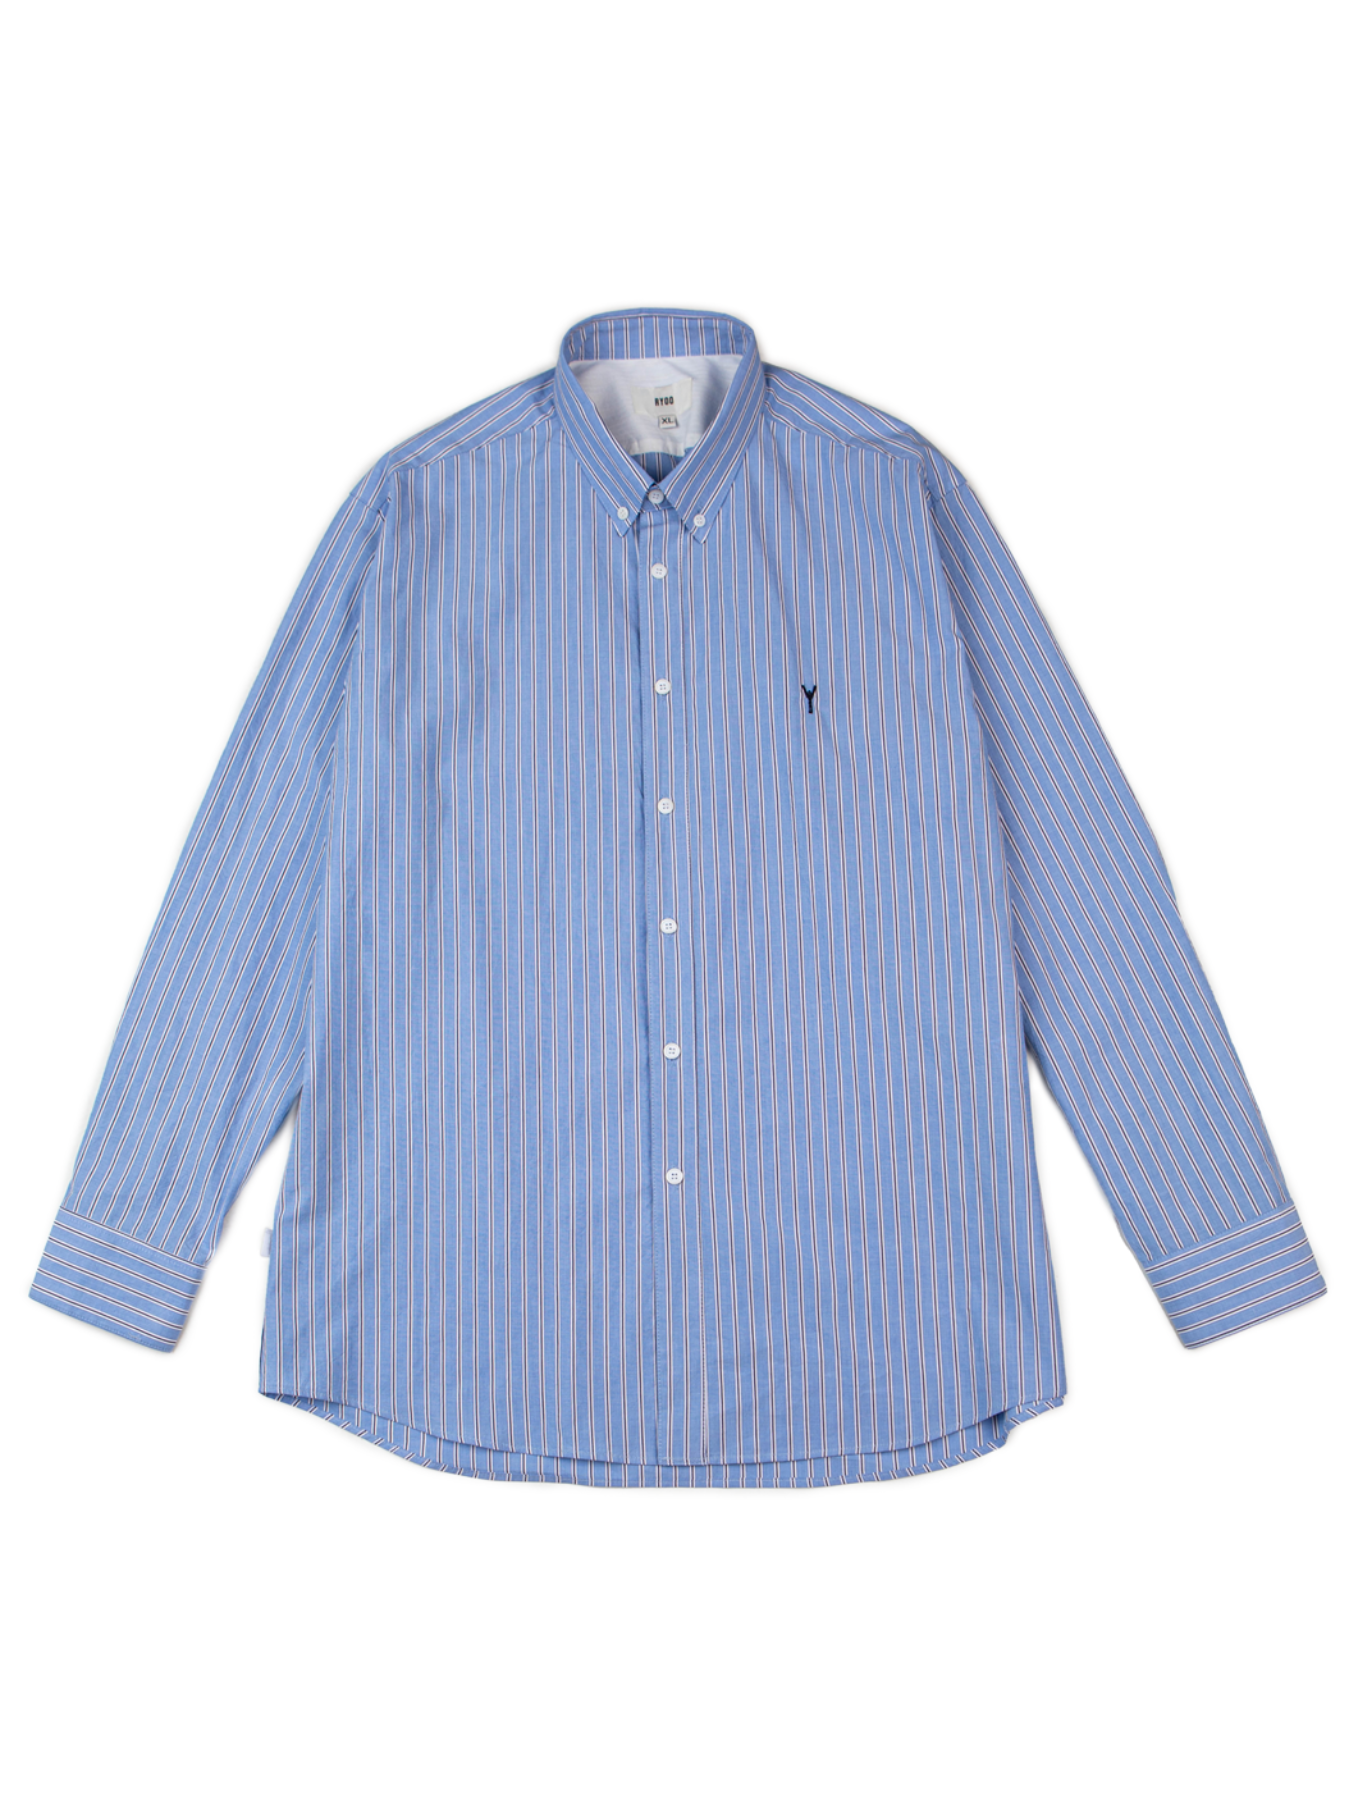 Asymmetric oversized pucker shirts #5 [stripe]